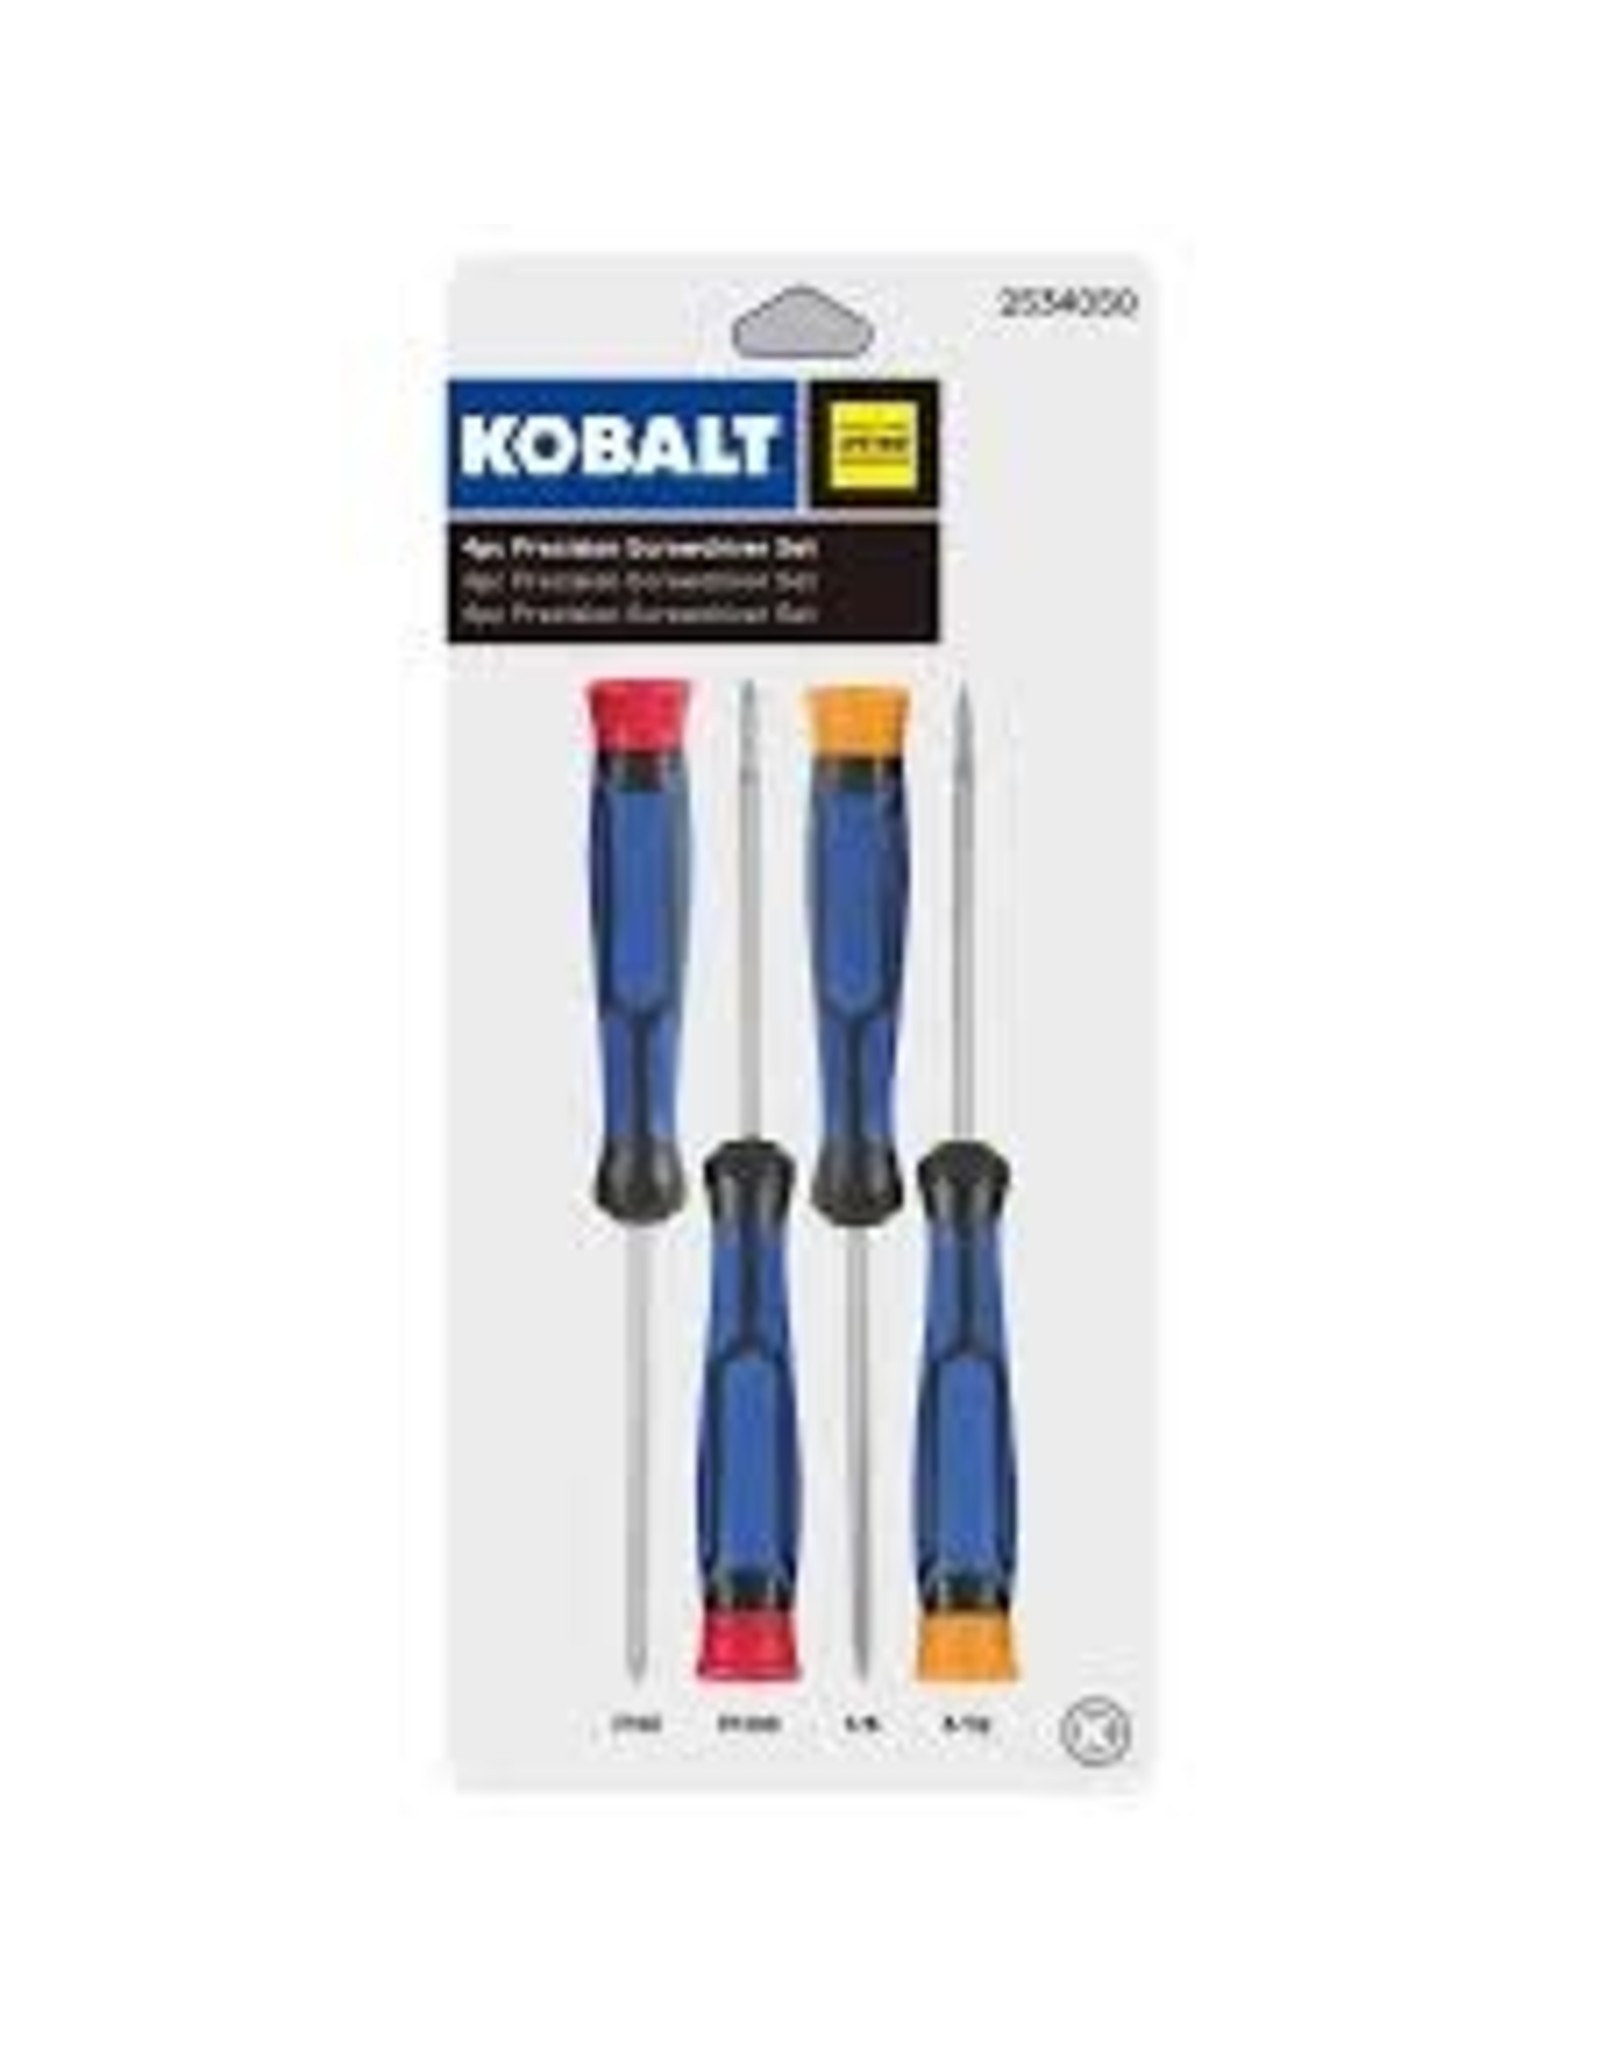 Kobalt 4-Pc Precision Screw